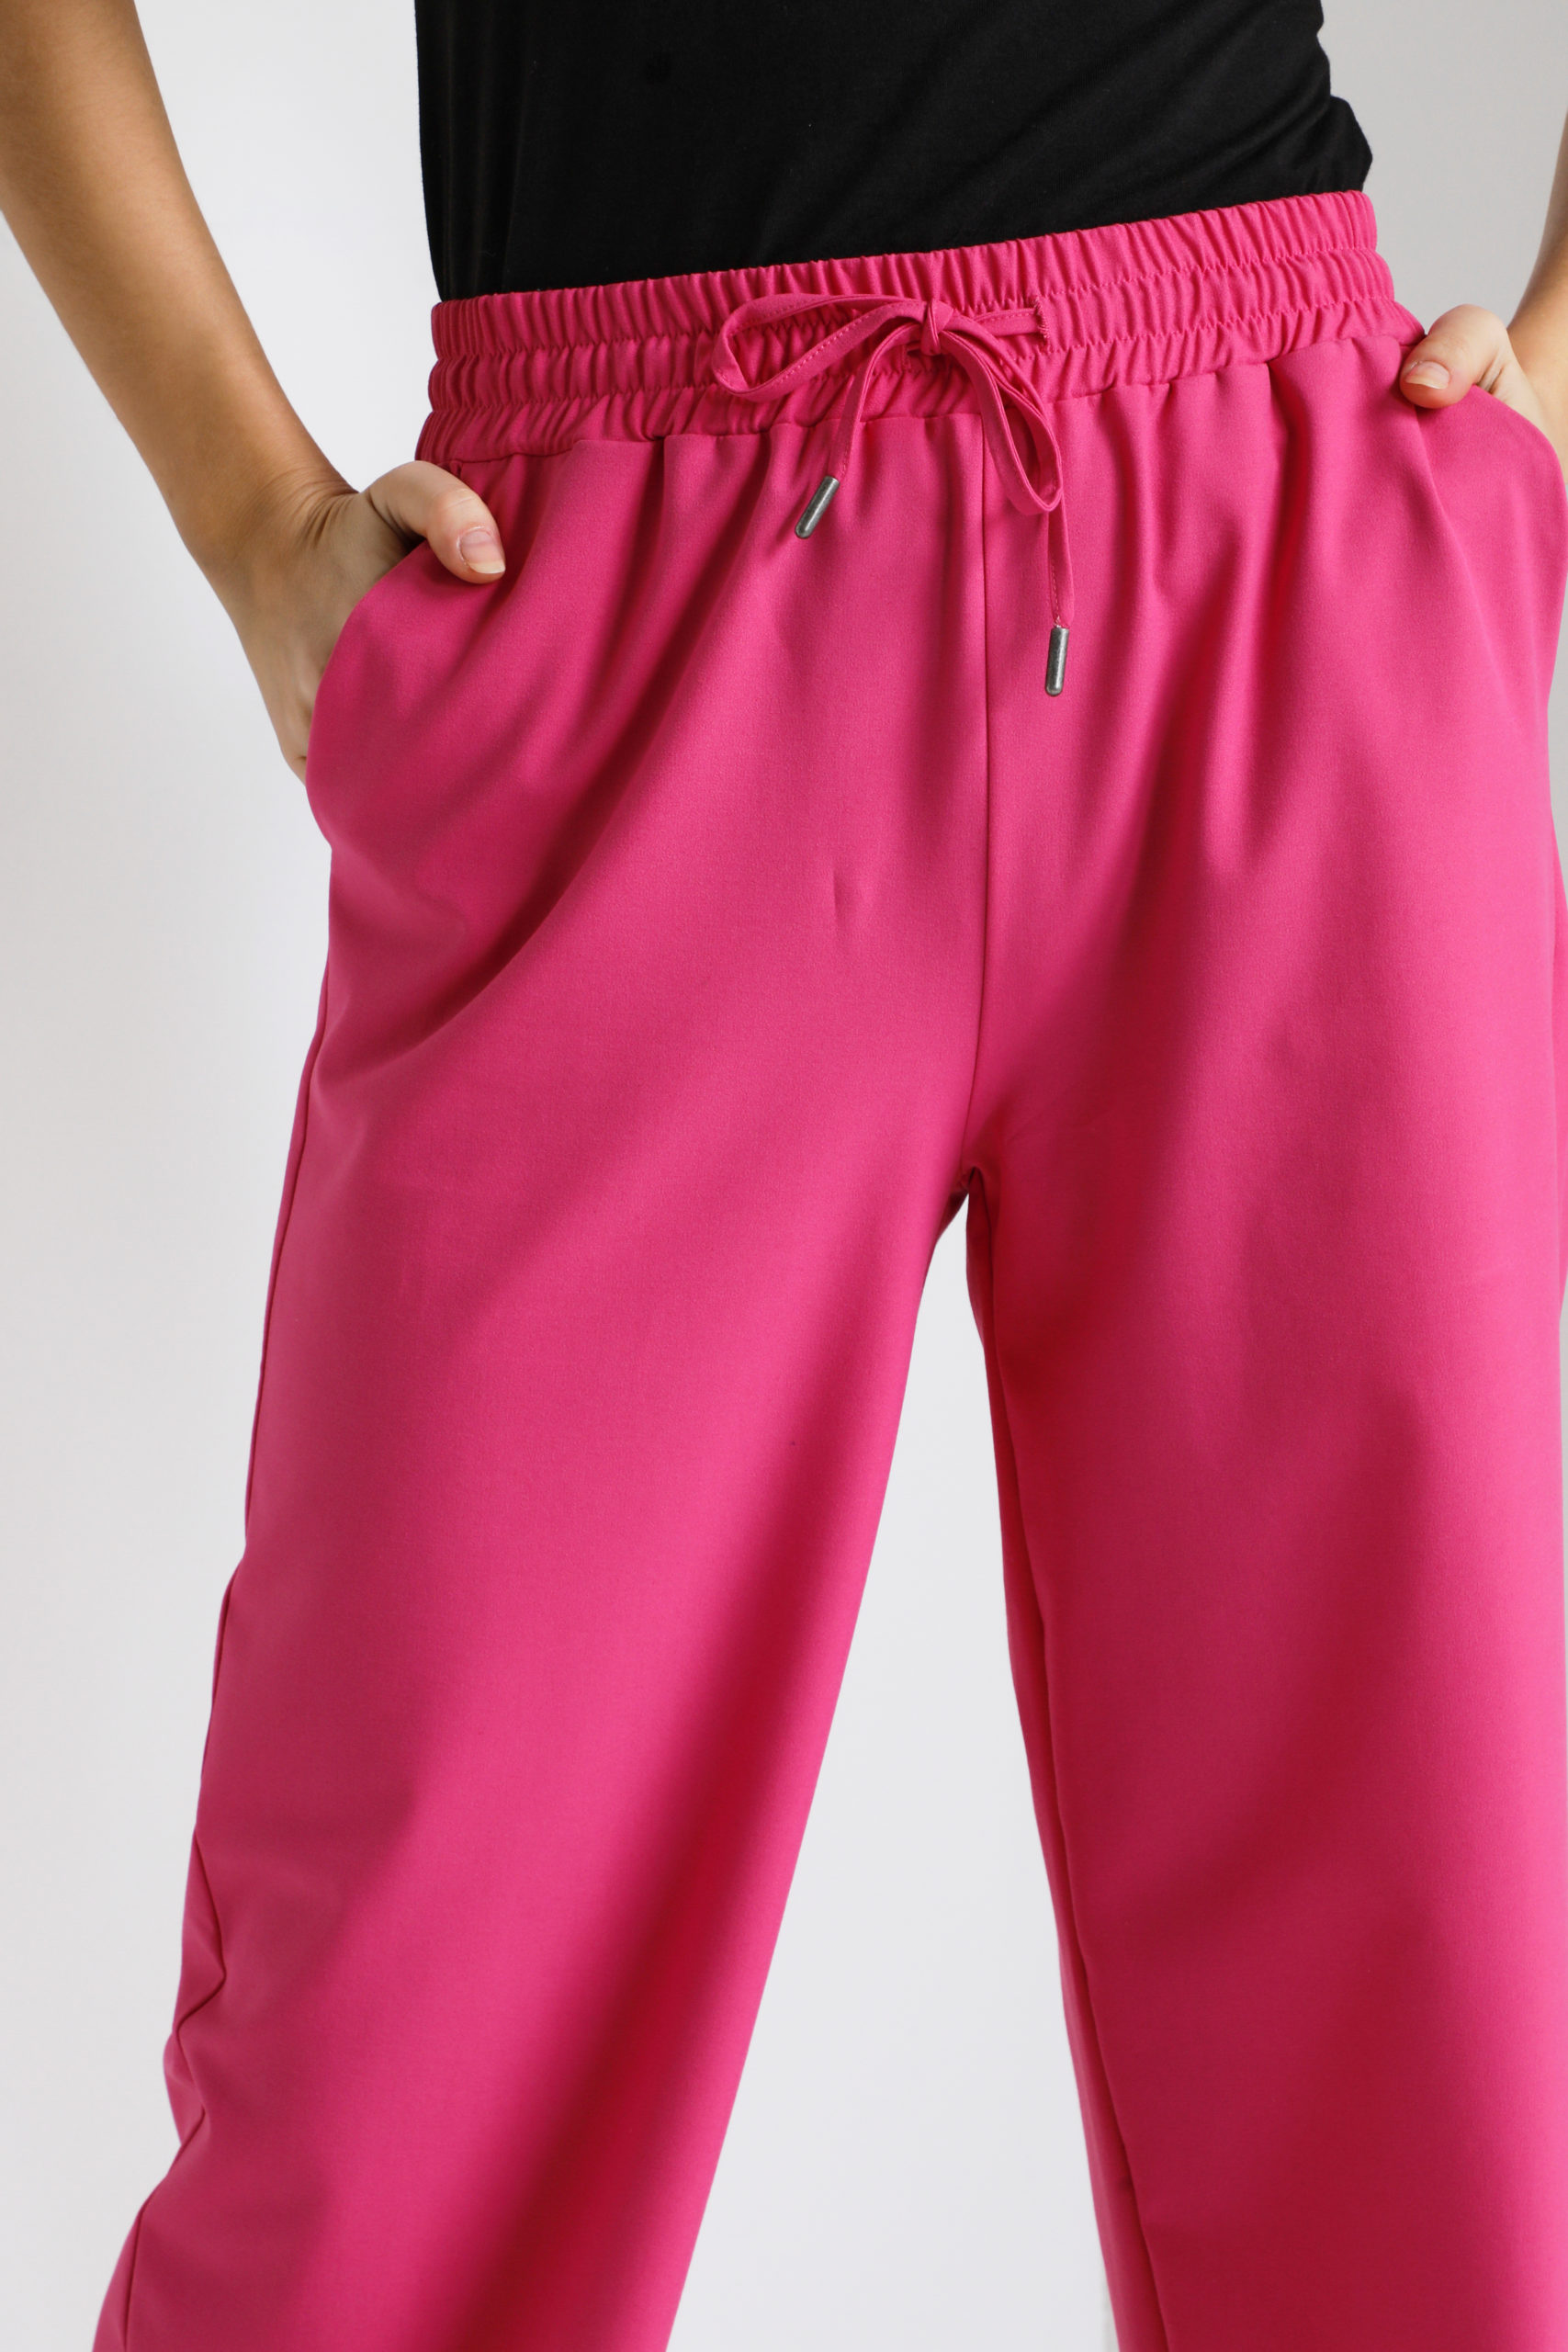 KAcolette HW Pants pink closeup